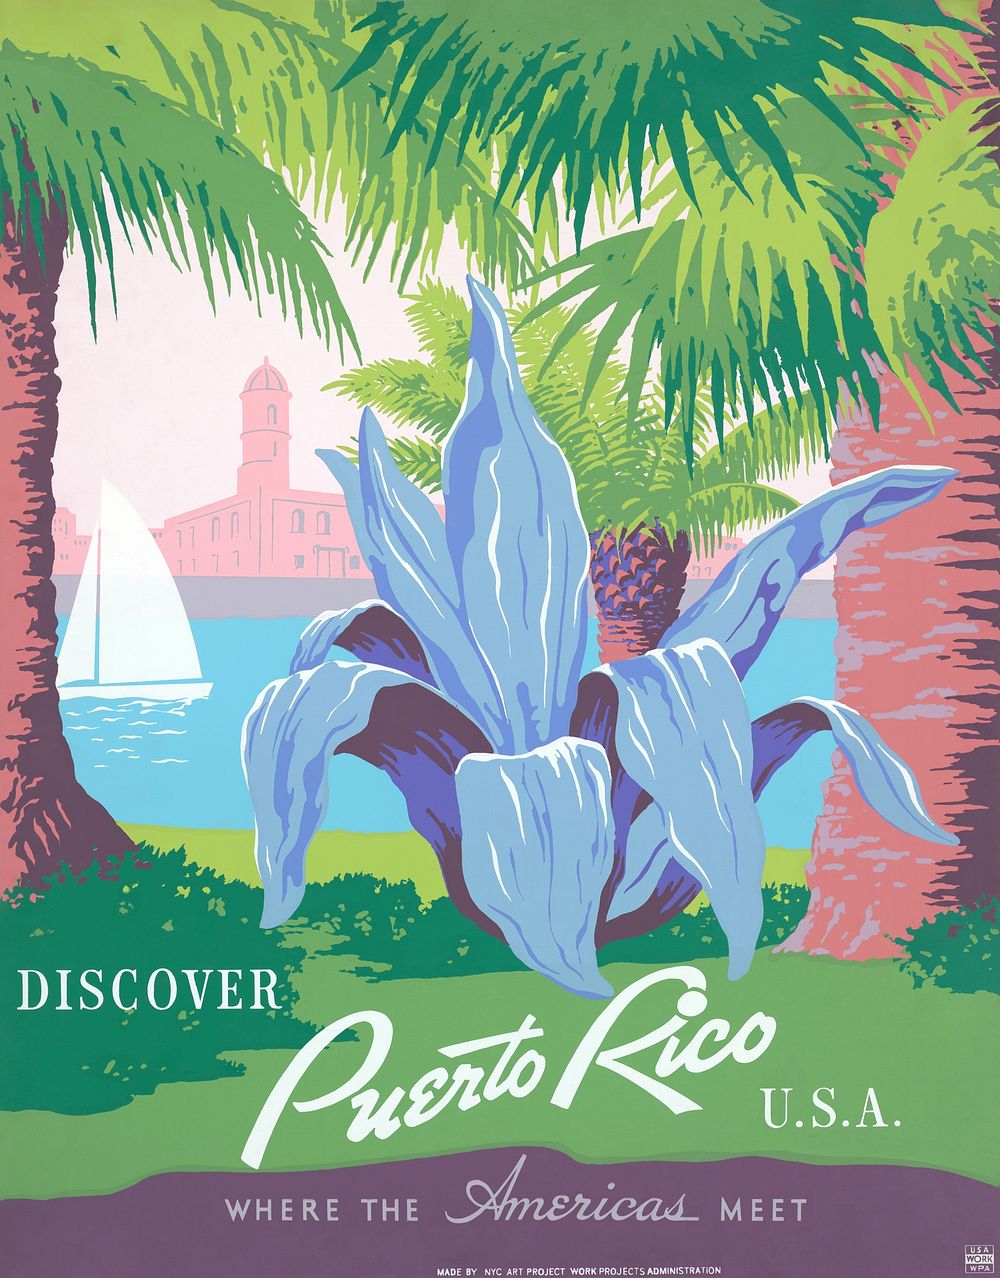 Discover Puerto Rico U.S.A. Where the Americas meet (1936-1940) poster by Frank S. Nicholson. Original public domain image…